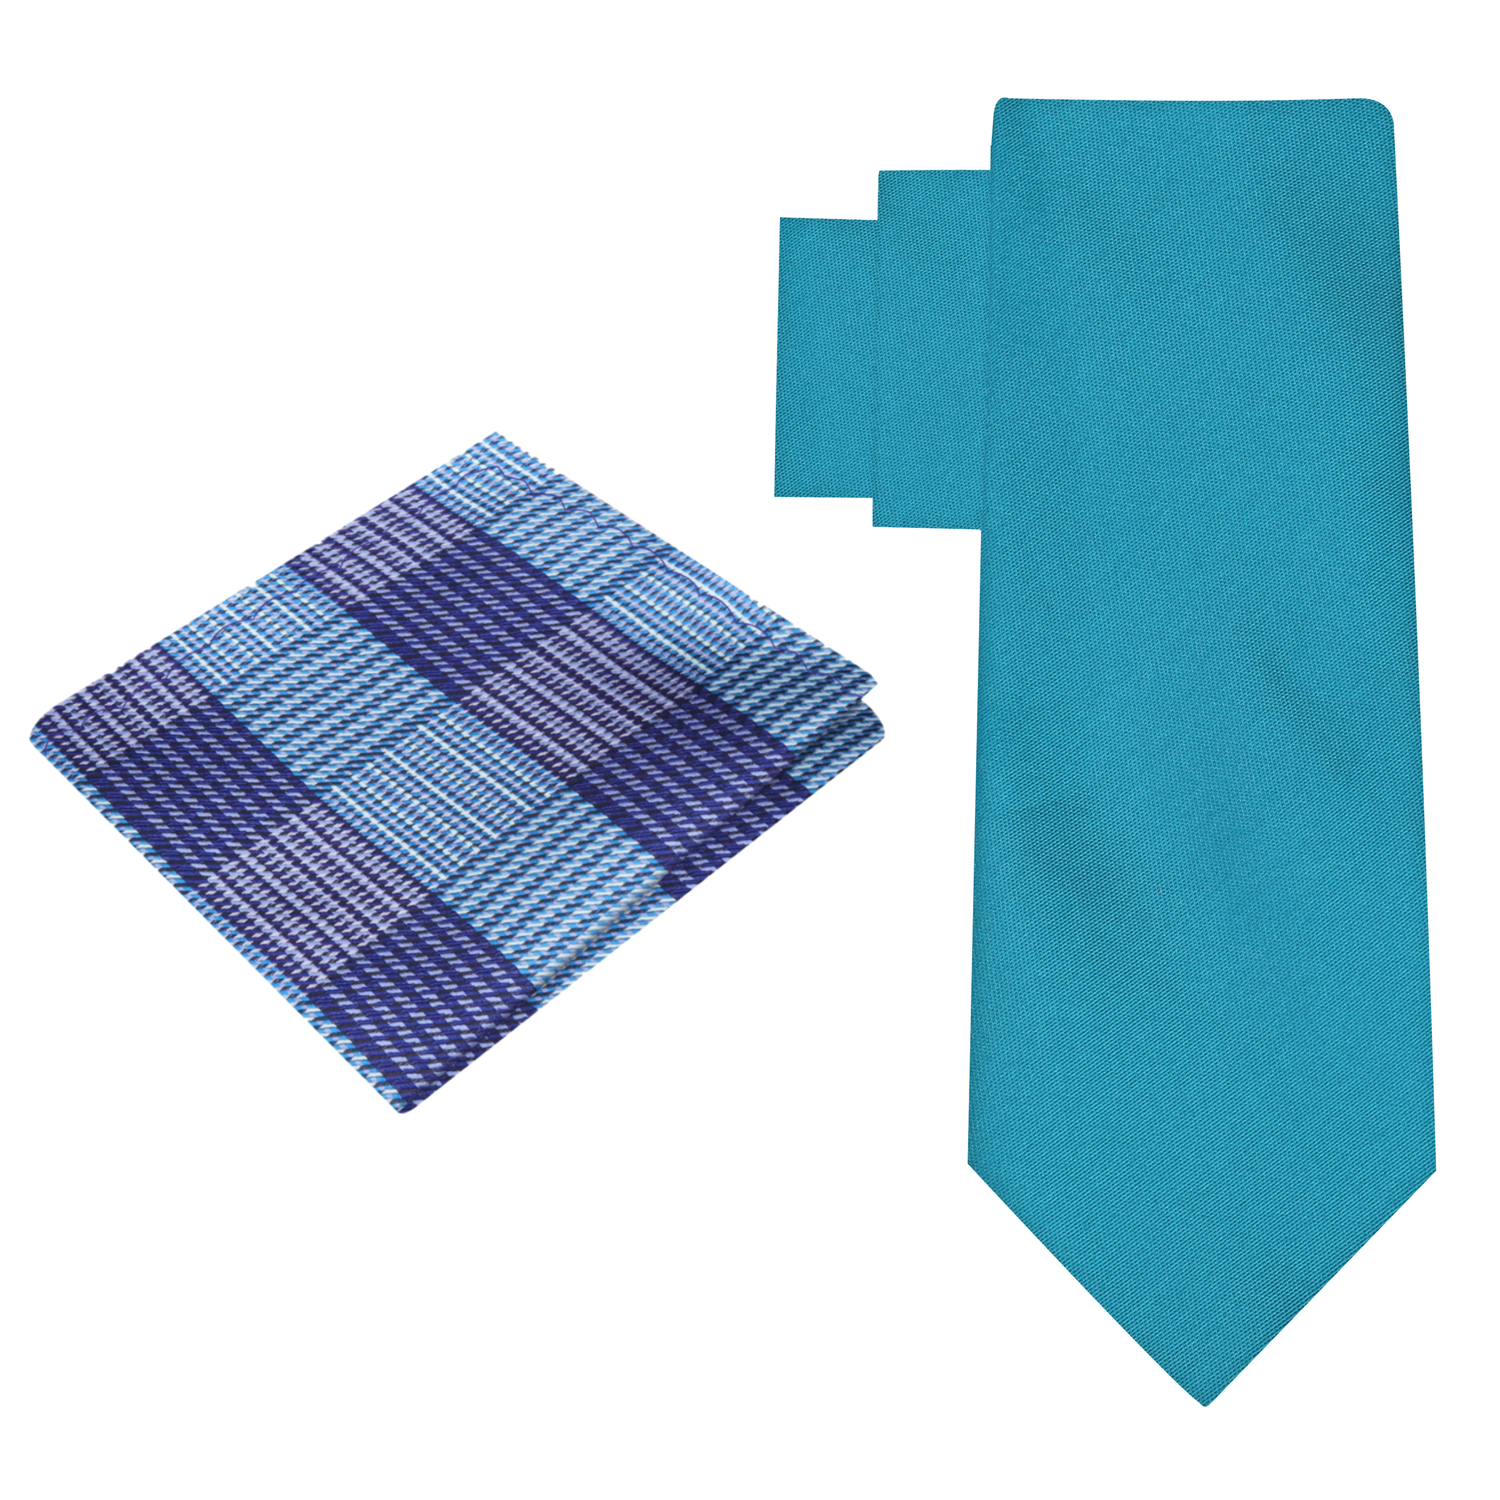 Alt View: Caribbean Blue Green Necktie with Plaid Pocket Square